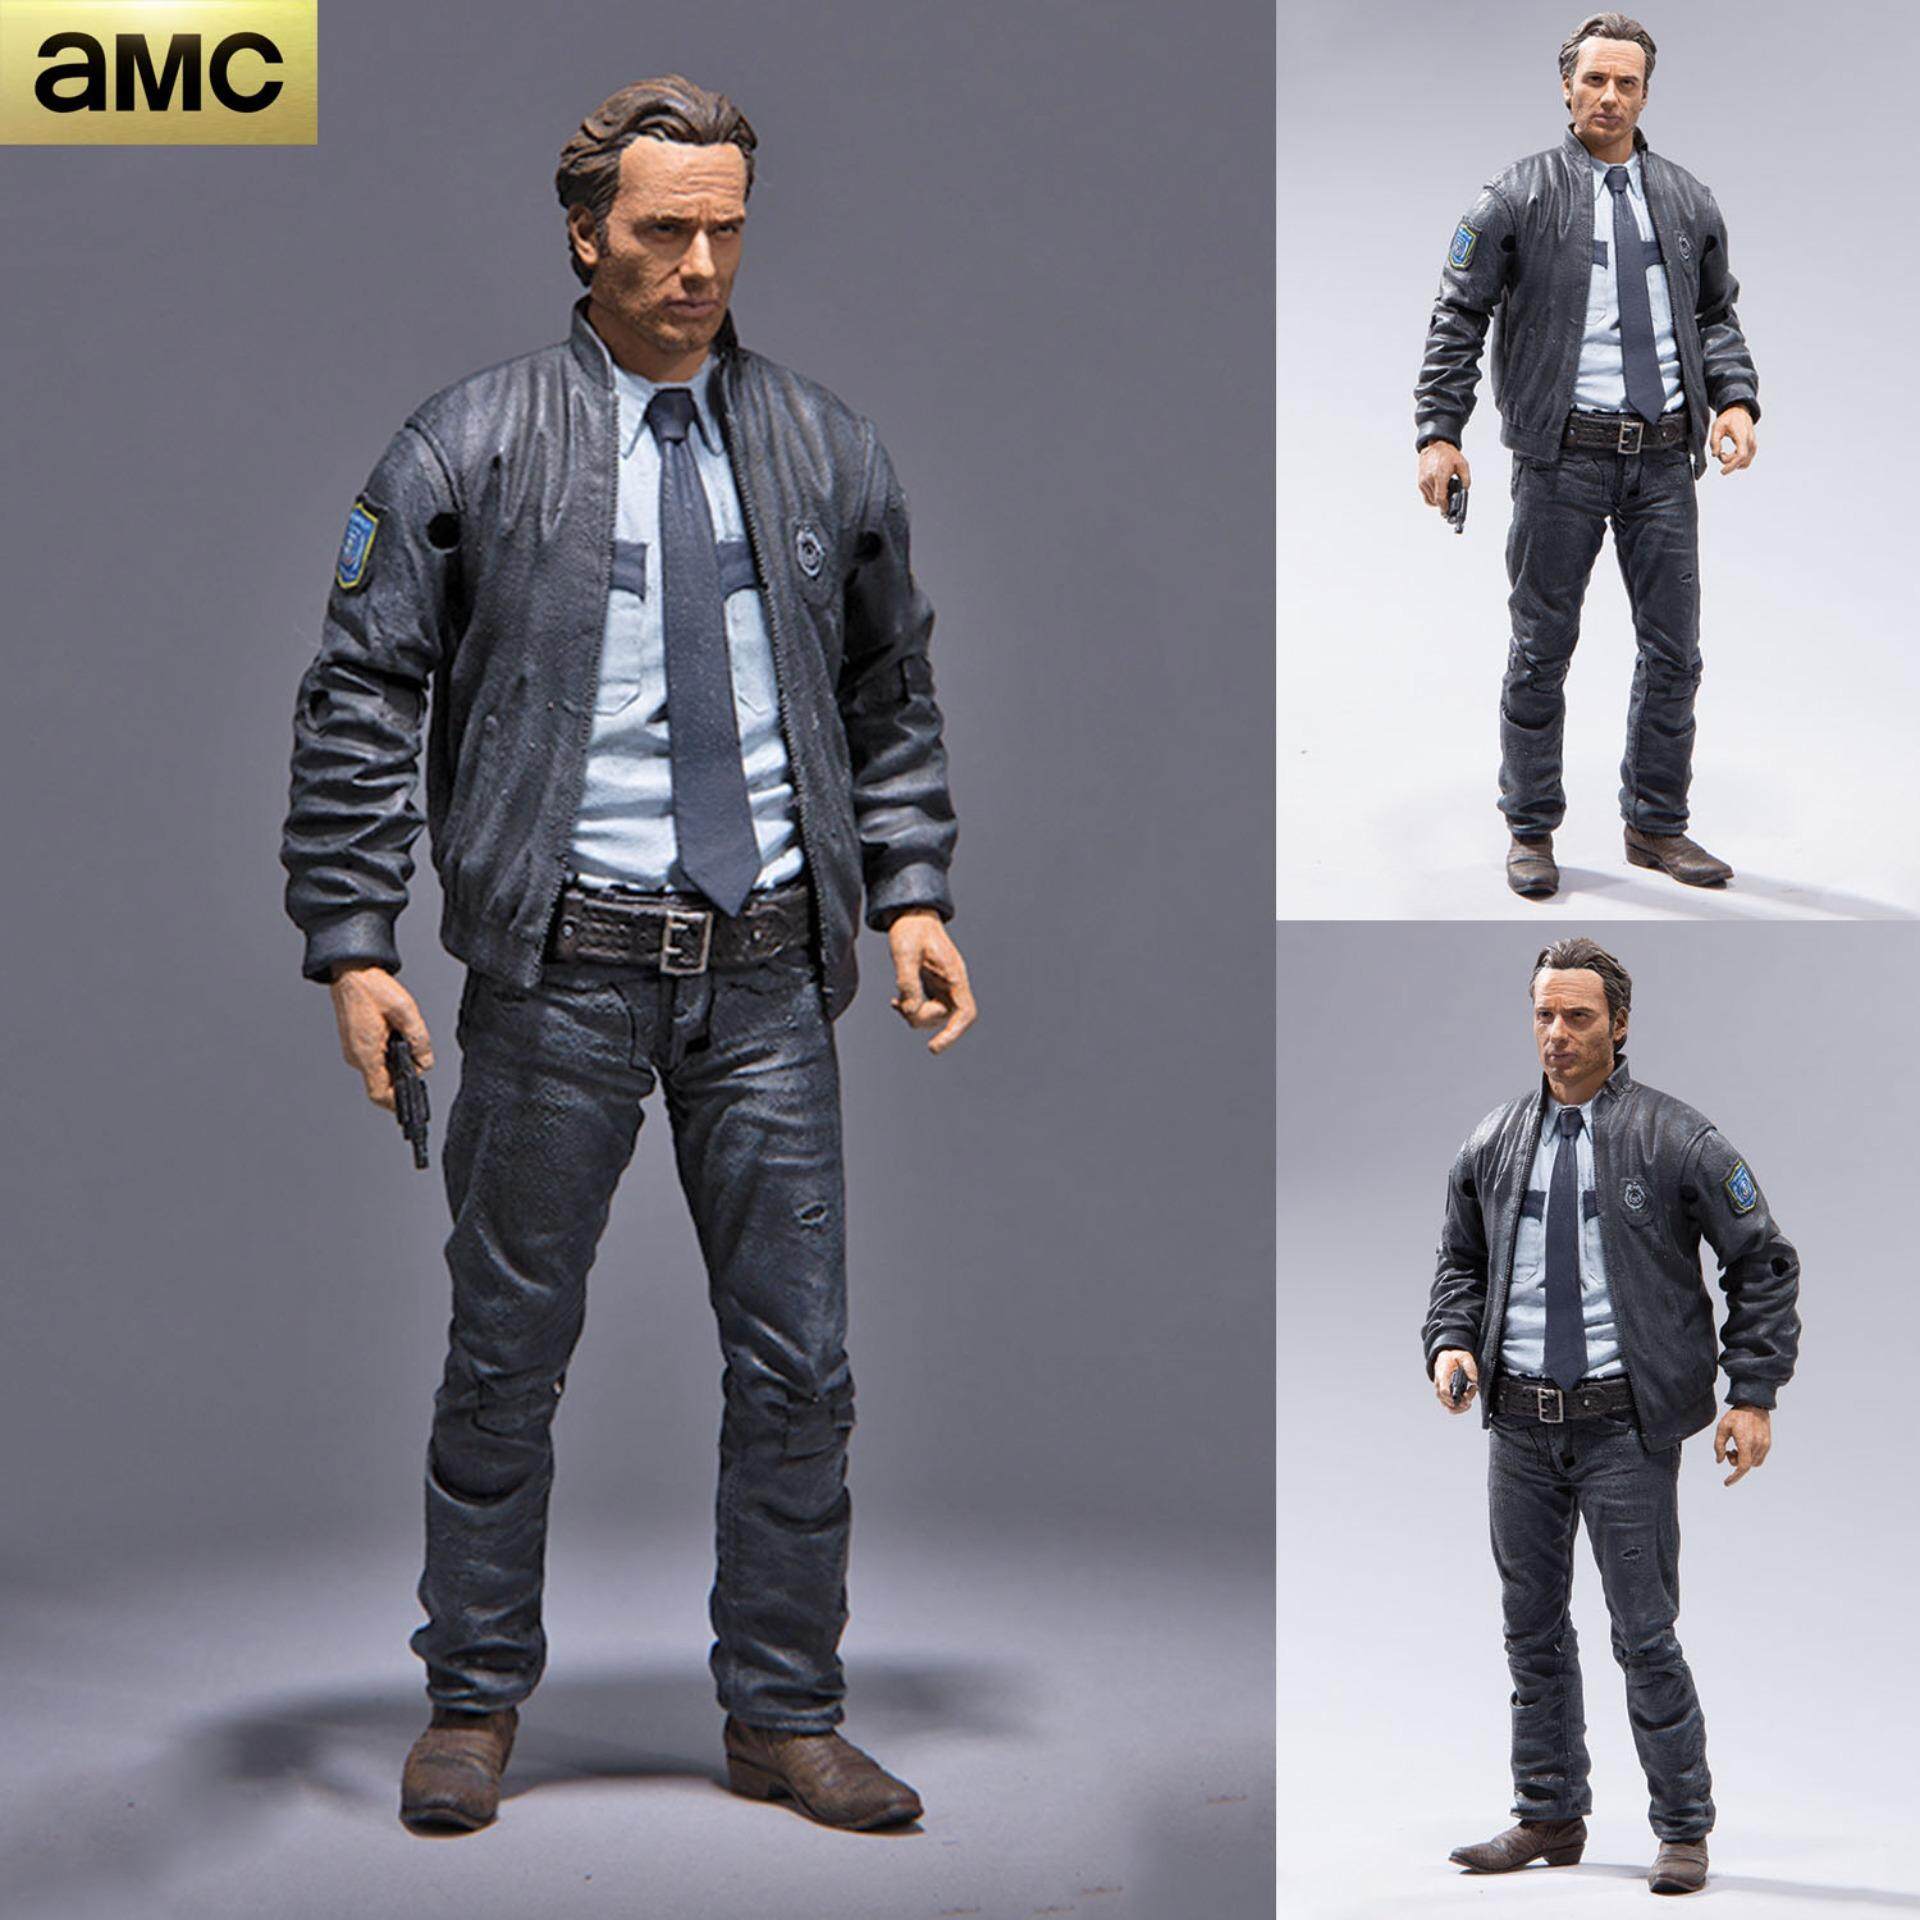 Model โมเดล งานแท้ 100% McFarlane Toys AMC จากหนัง The Walking Dead เดอะวอล์กกิงเดด Rick Grimes ริค ไกรมส์ Series 10 Andrew Lincoln แอนดรูว์ ลินคอล์น Ver Figma ฟิกม่า Anime ขยับแขน-ขาได้ ของขวัญ Gift อนิเมะ การ์ตูน มังงะ Doll ตุ๊กตา manga Figure ฟิกเกอร์